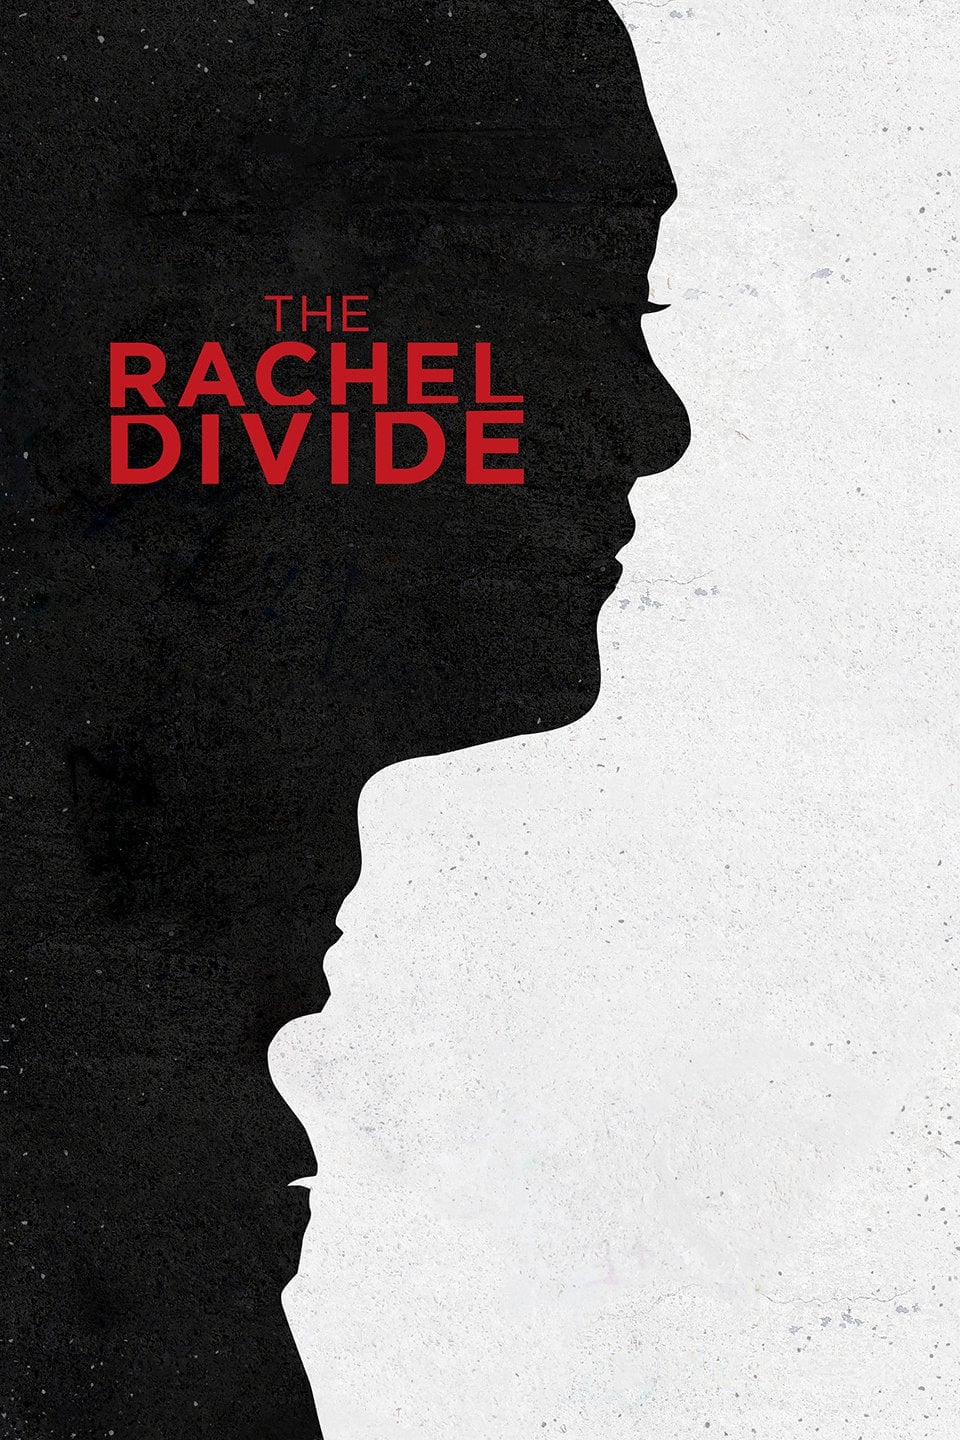 Caratula de The Rachel Divide (The Rachel Divide) 